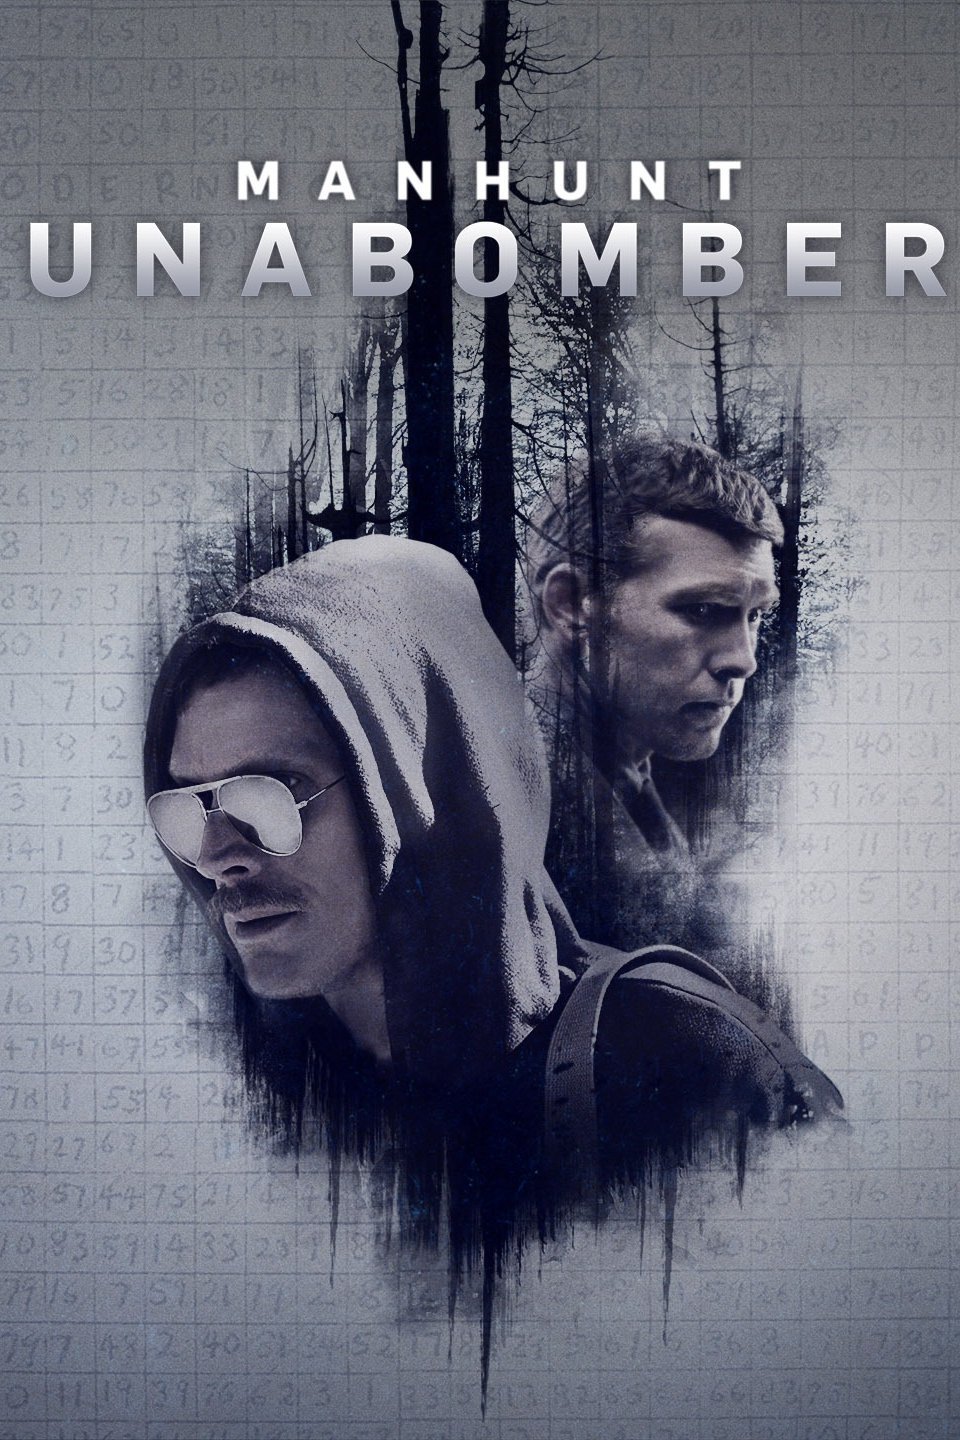 Manhunt: Unabomber 2017: Season 1